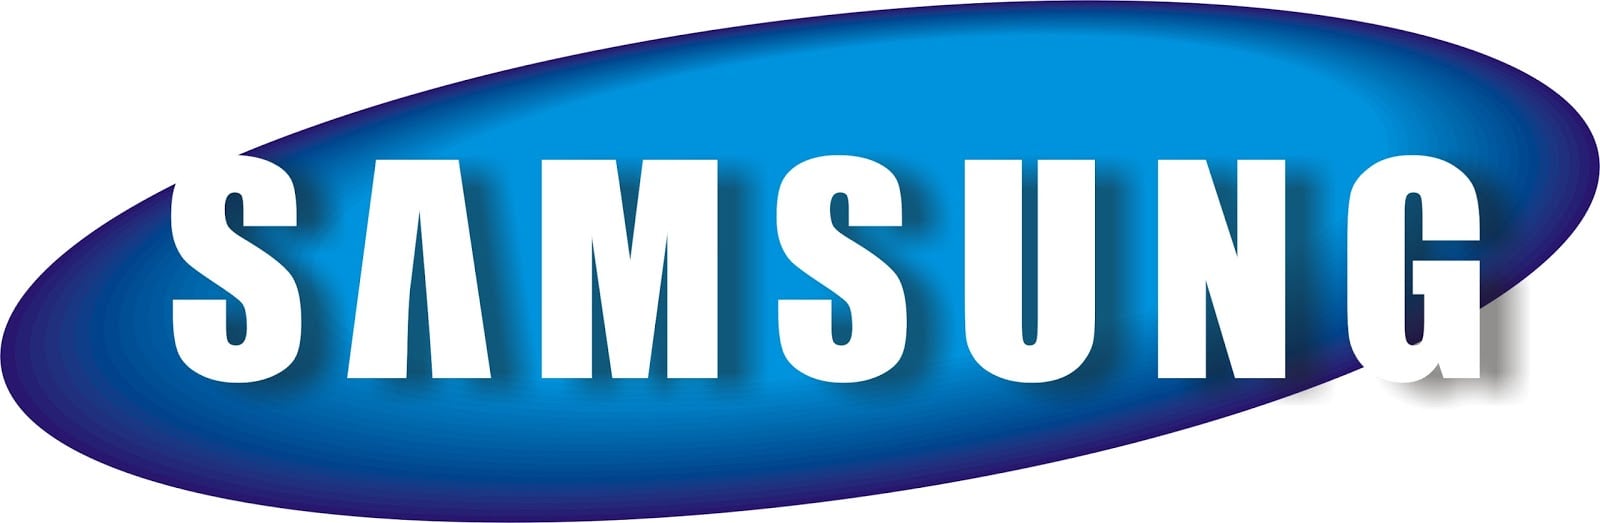 Samsung Logo Wallpapers 9